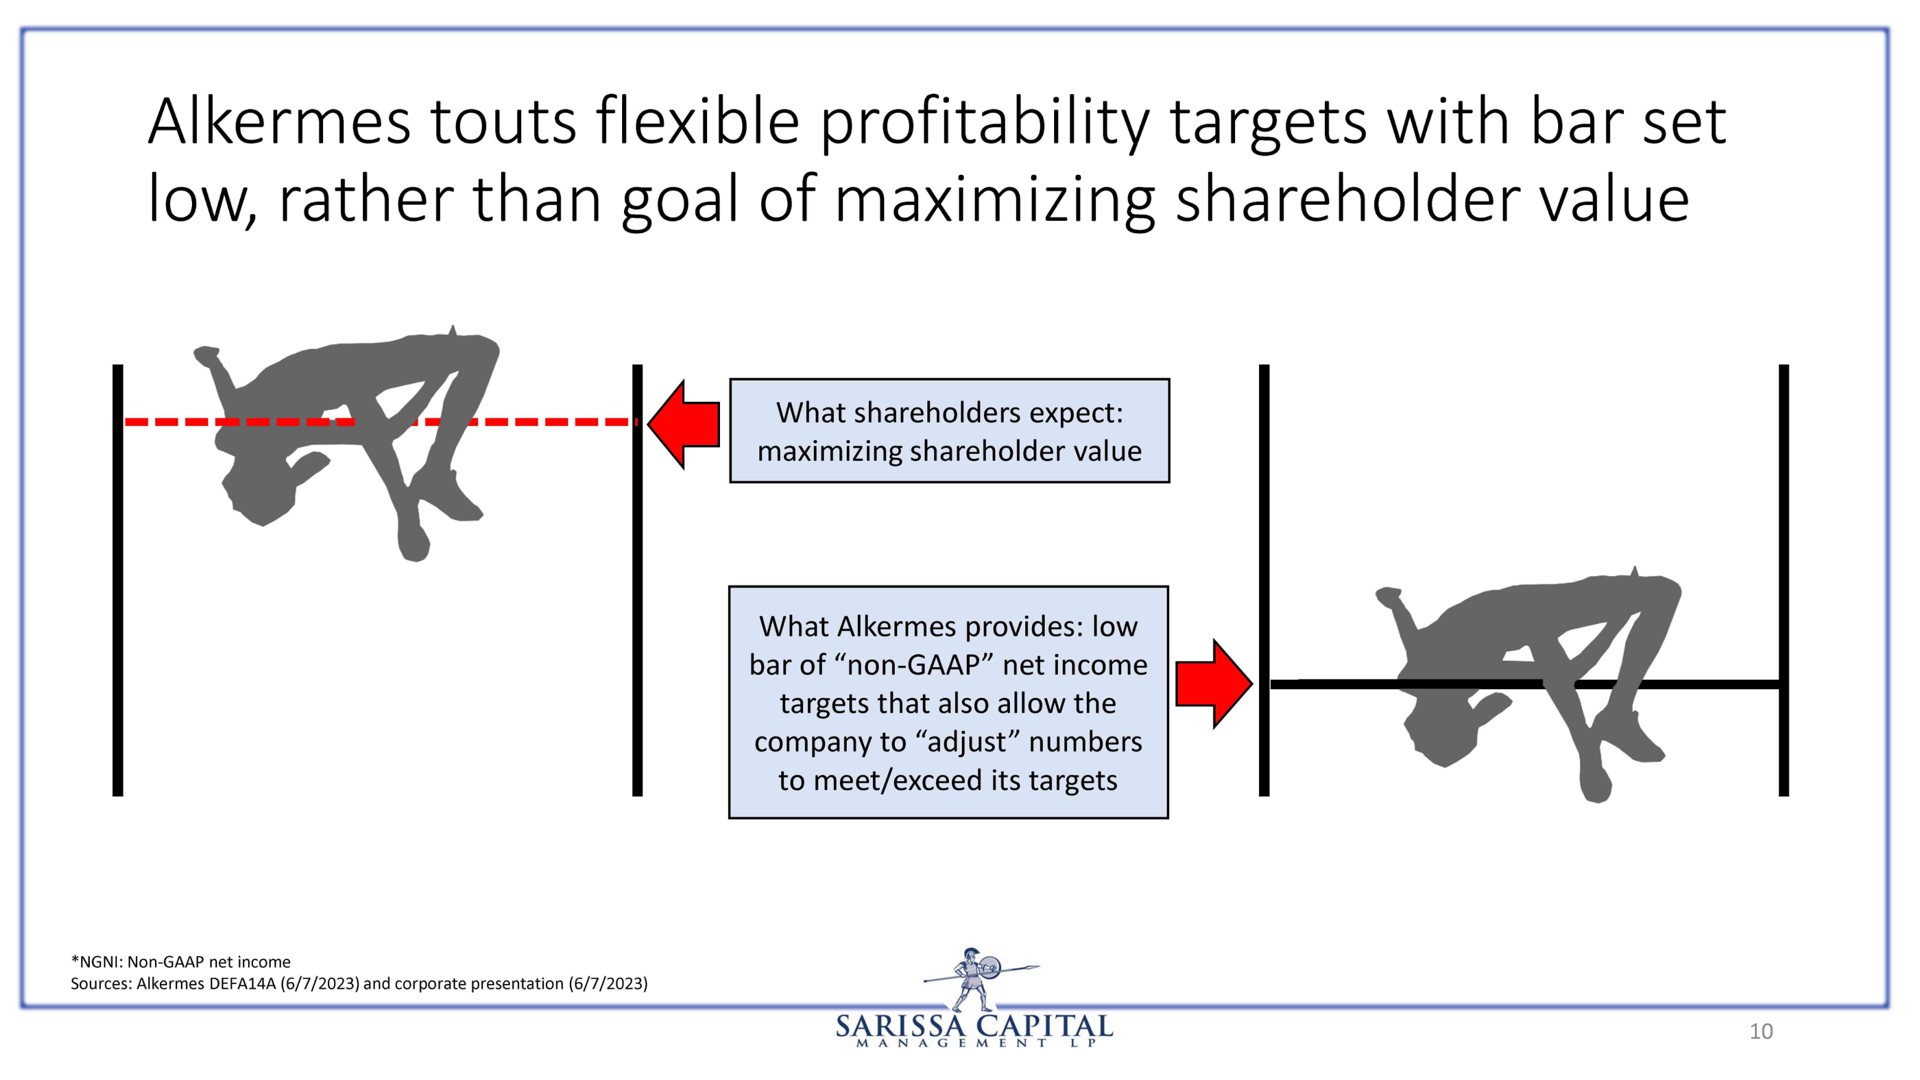 alkermes touts flexible profitability targets with bar set low rather than goal of maximizing shareholder value | Sarissa Capital